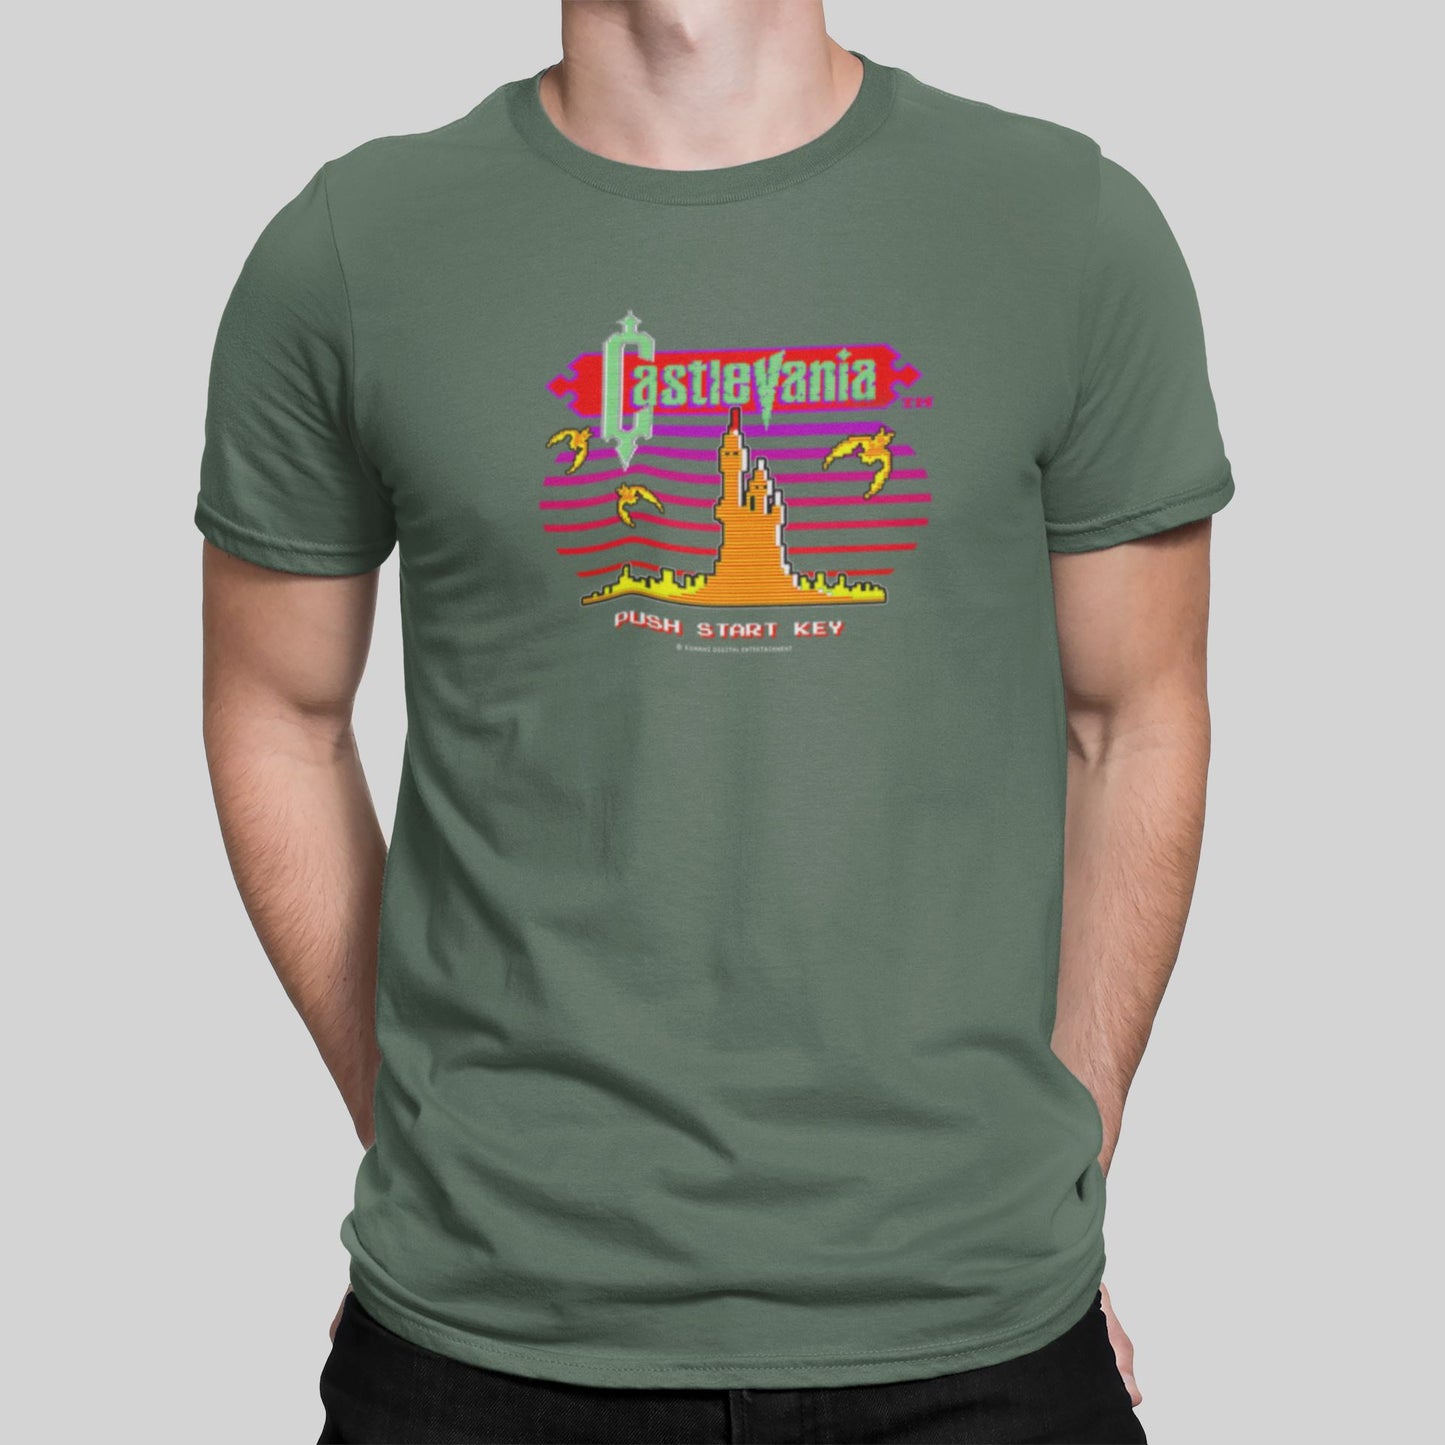 Castlevania Retro Gaming T-Shirt T-Shirt Seven Squared 